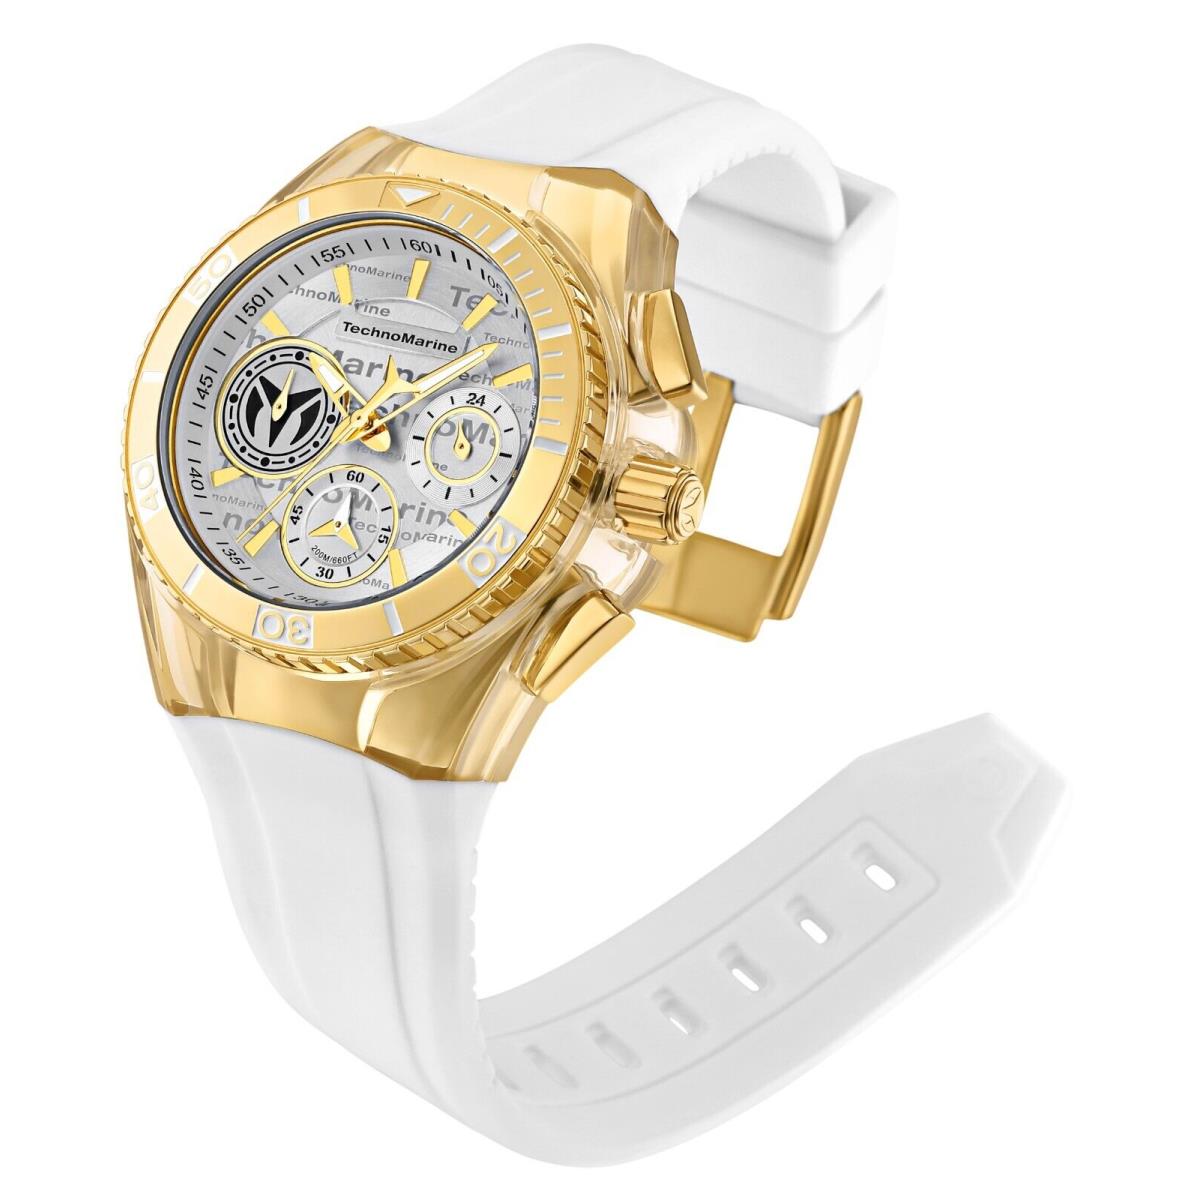 Technomarine TM-118133 Cruise California 40mm Gold with White Strap Watch - Dial: Silver, Band: White, Bezel: White